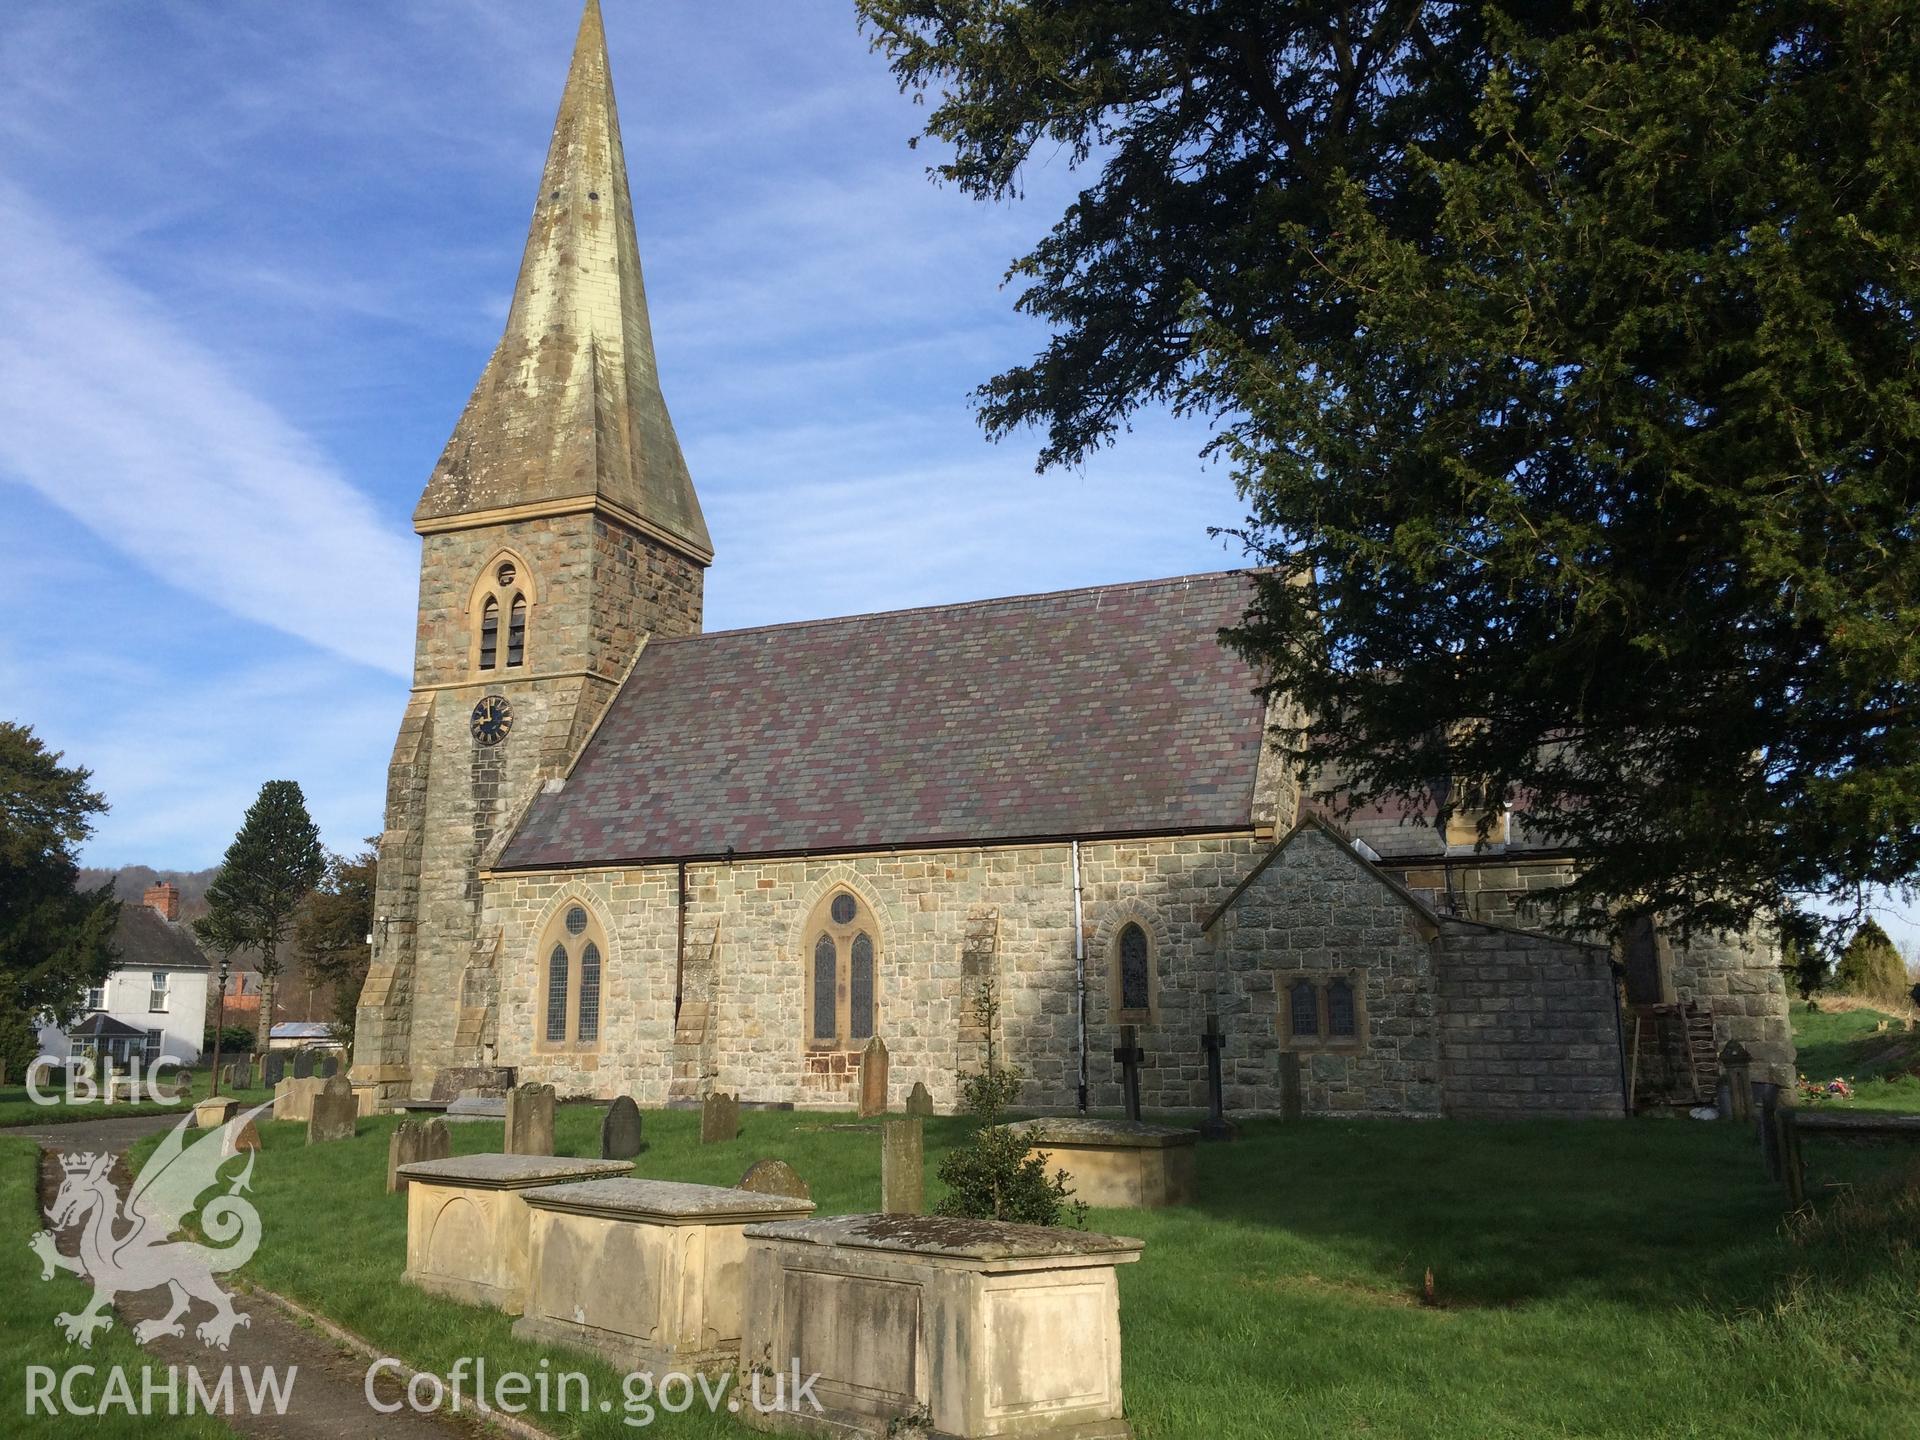 Colour photo showing Castle Caereinion Church, produced by Paul R. Davis, 25th March 2017.